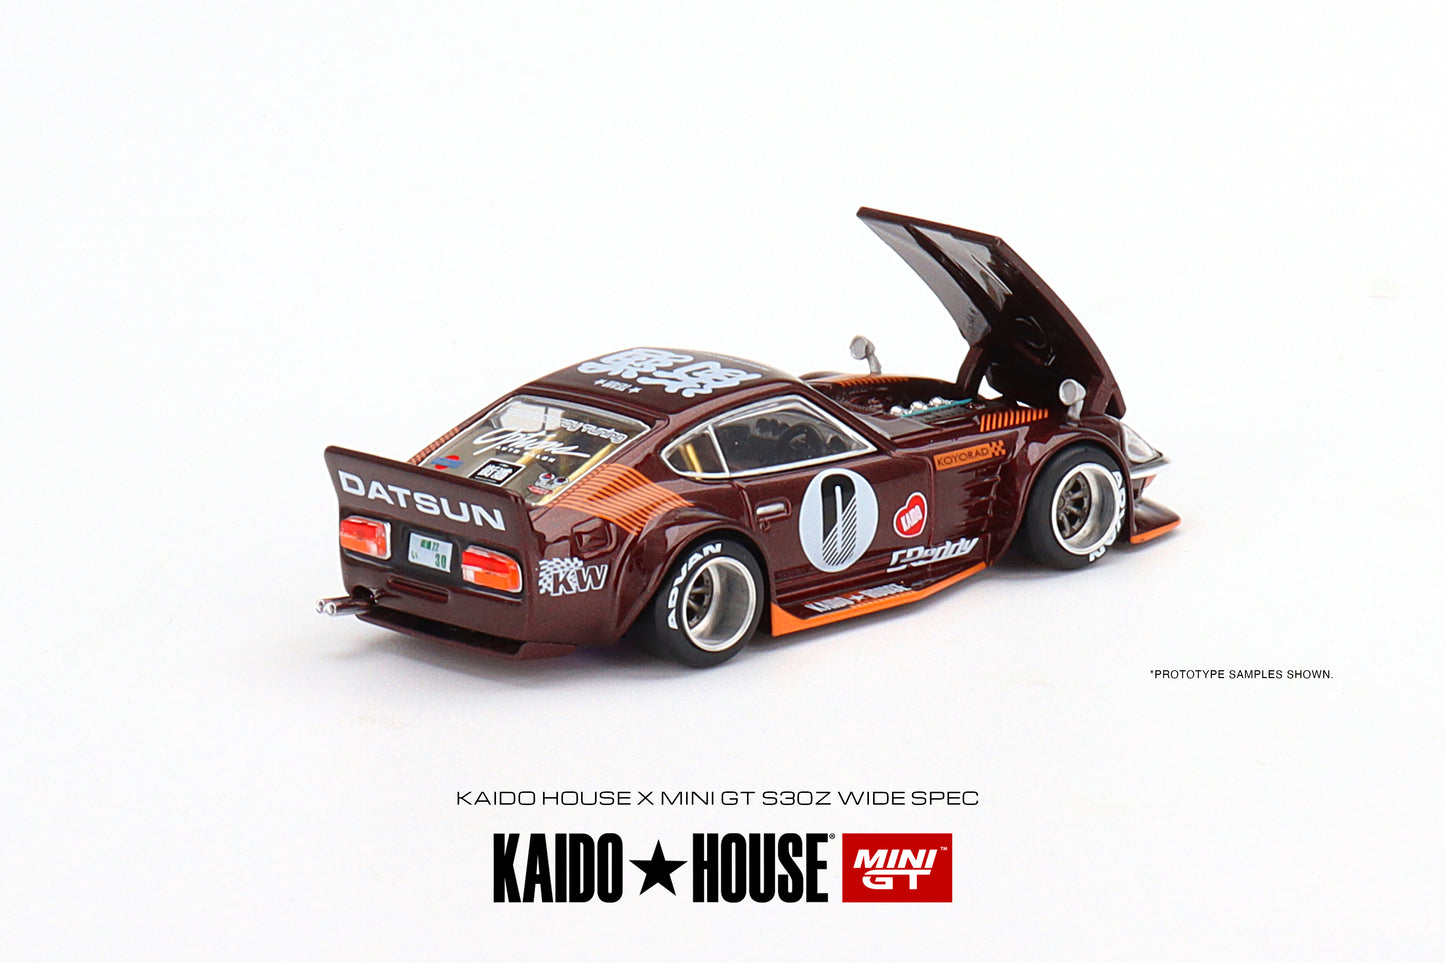 Mini GT x Kaido House No.023 Datsun Fairlady Z Dark Red